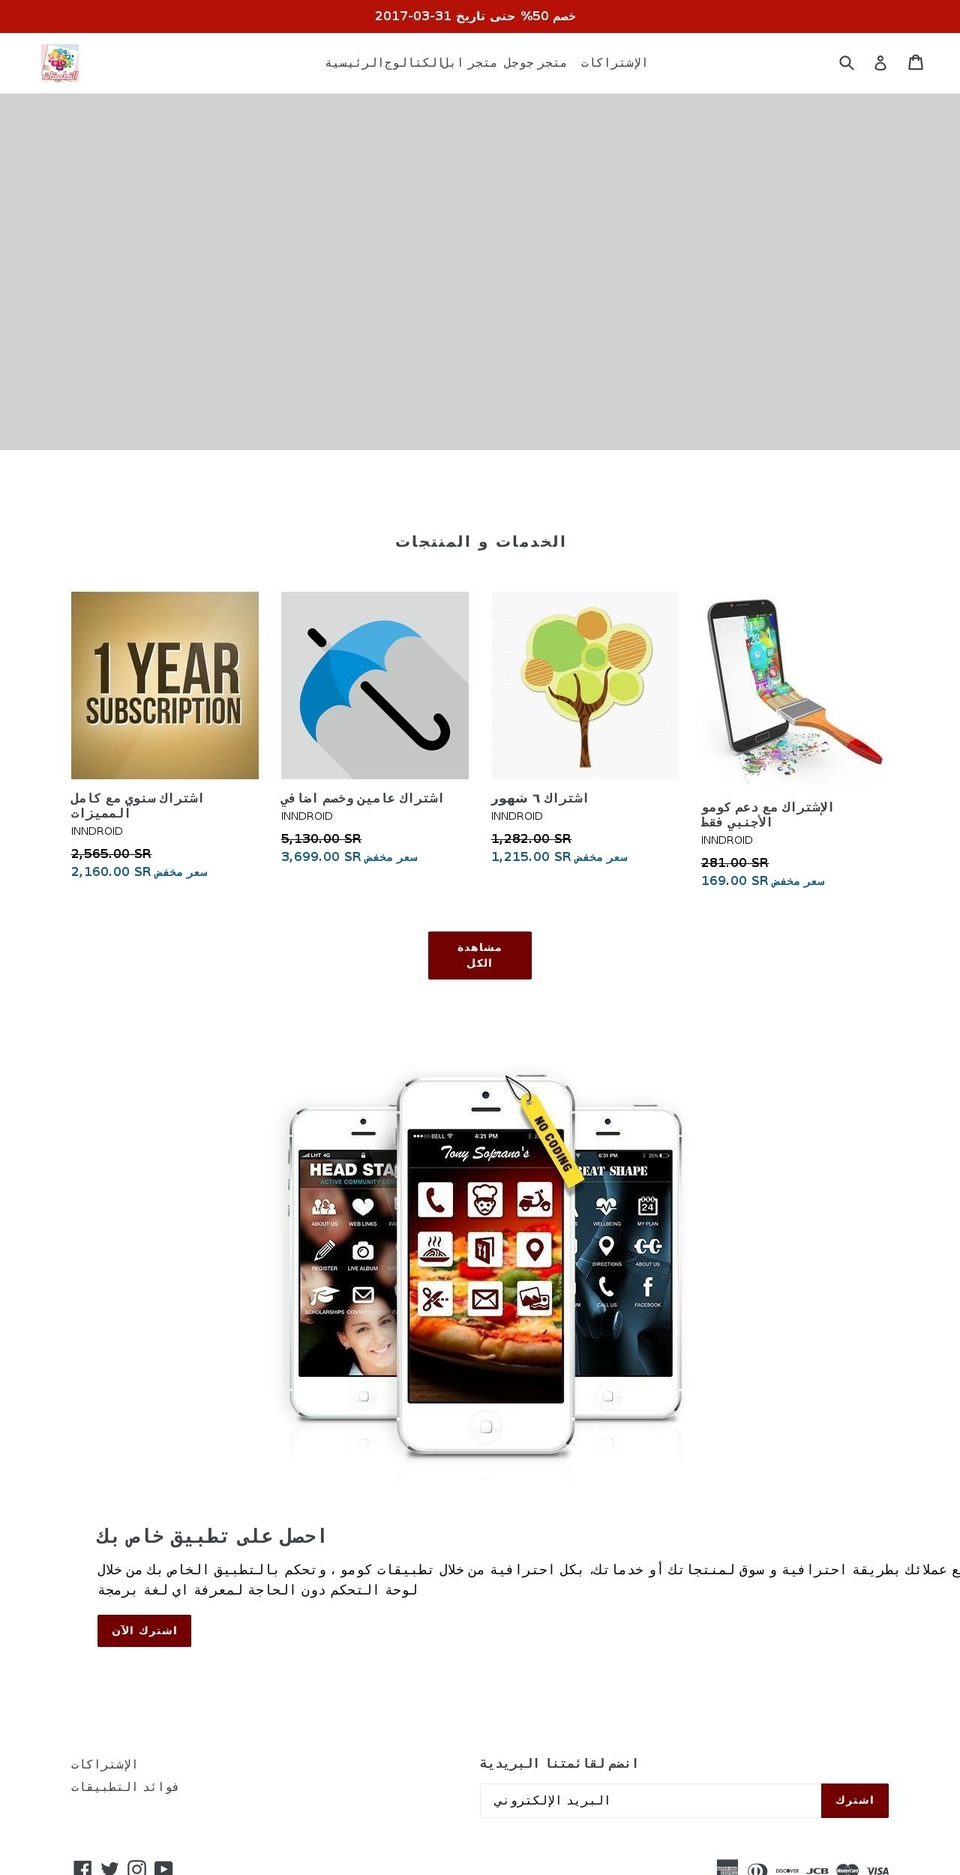 inndroid.com shopify website screenshot